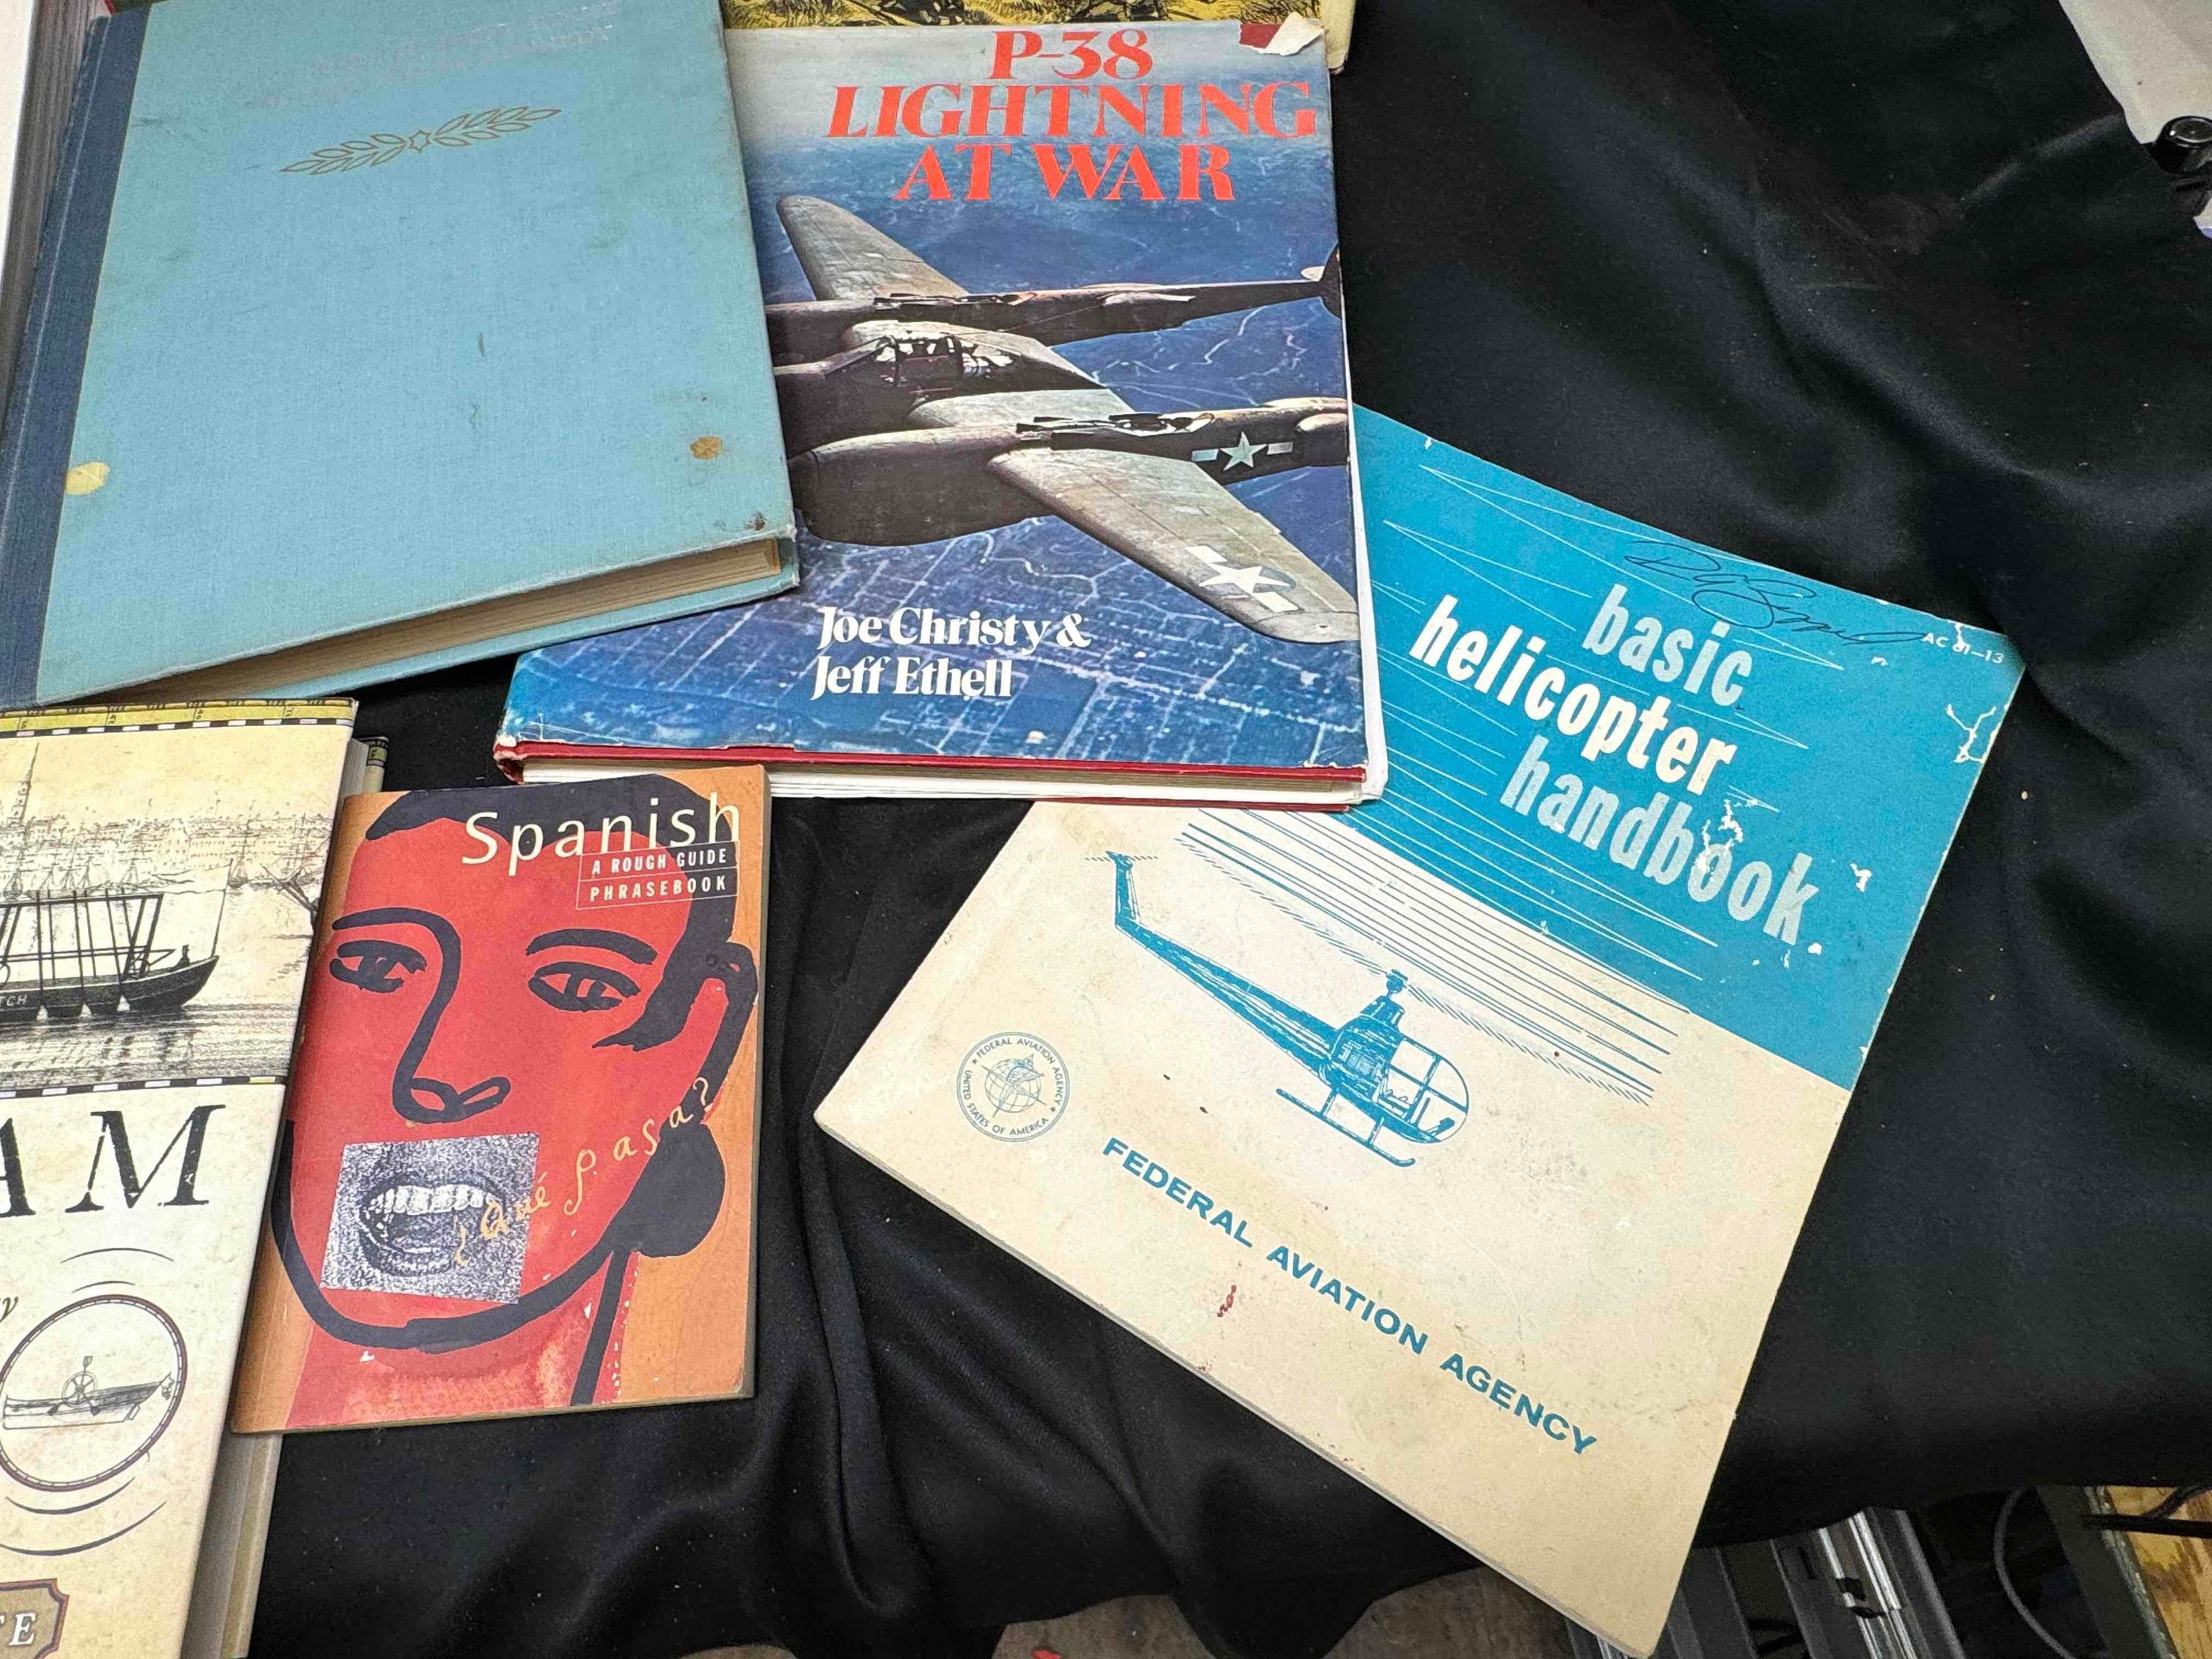 Assorted Books. Monet, Treasure Island, Norman Rockwell more